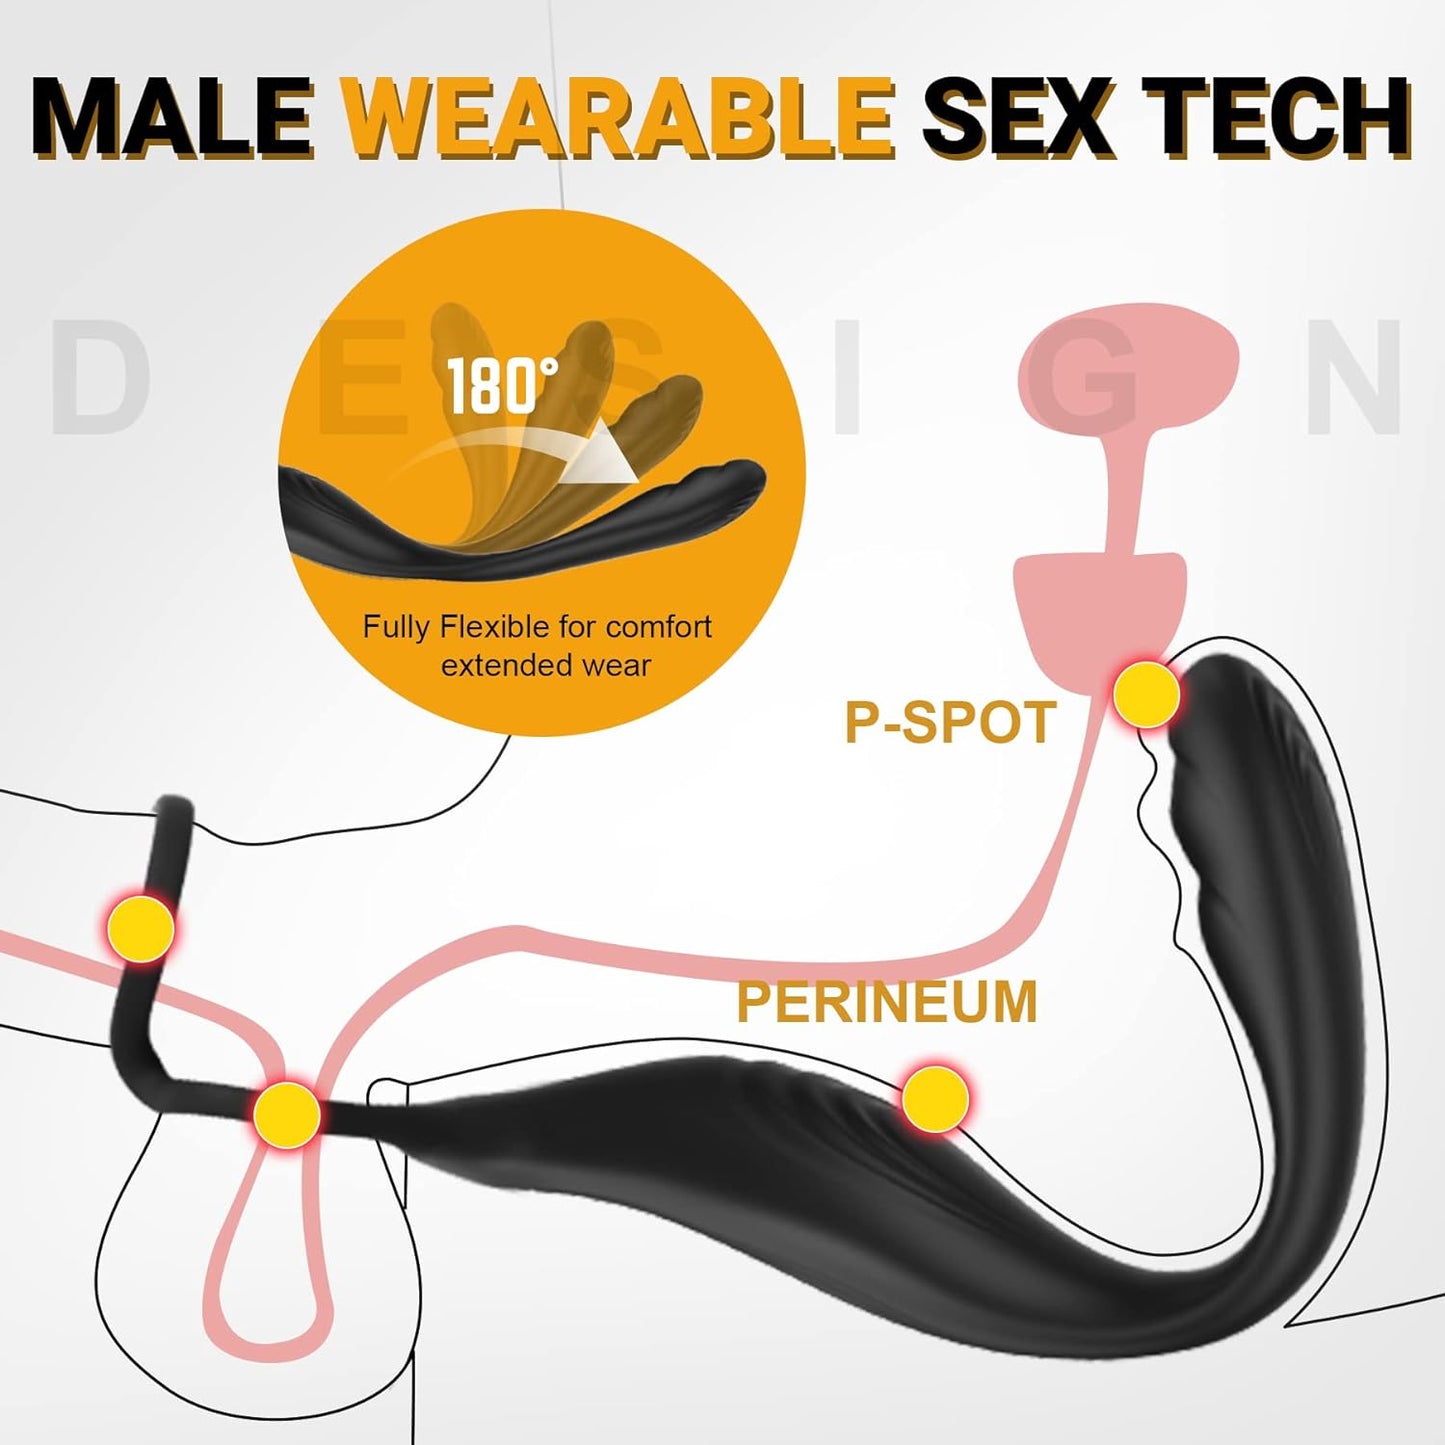 Portable anal vibrators anal plug prostate stimulation with 13 vibration modes